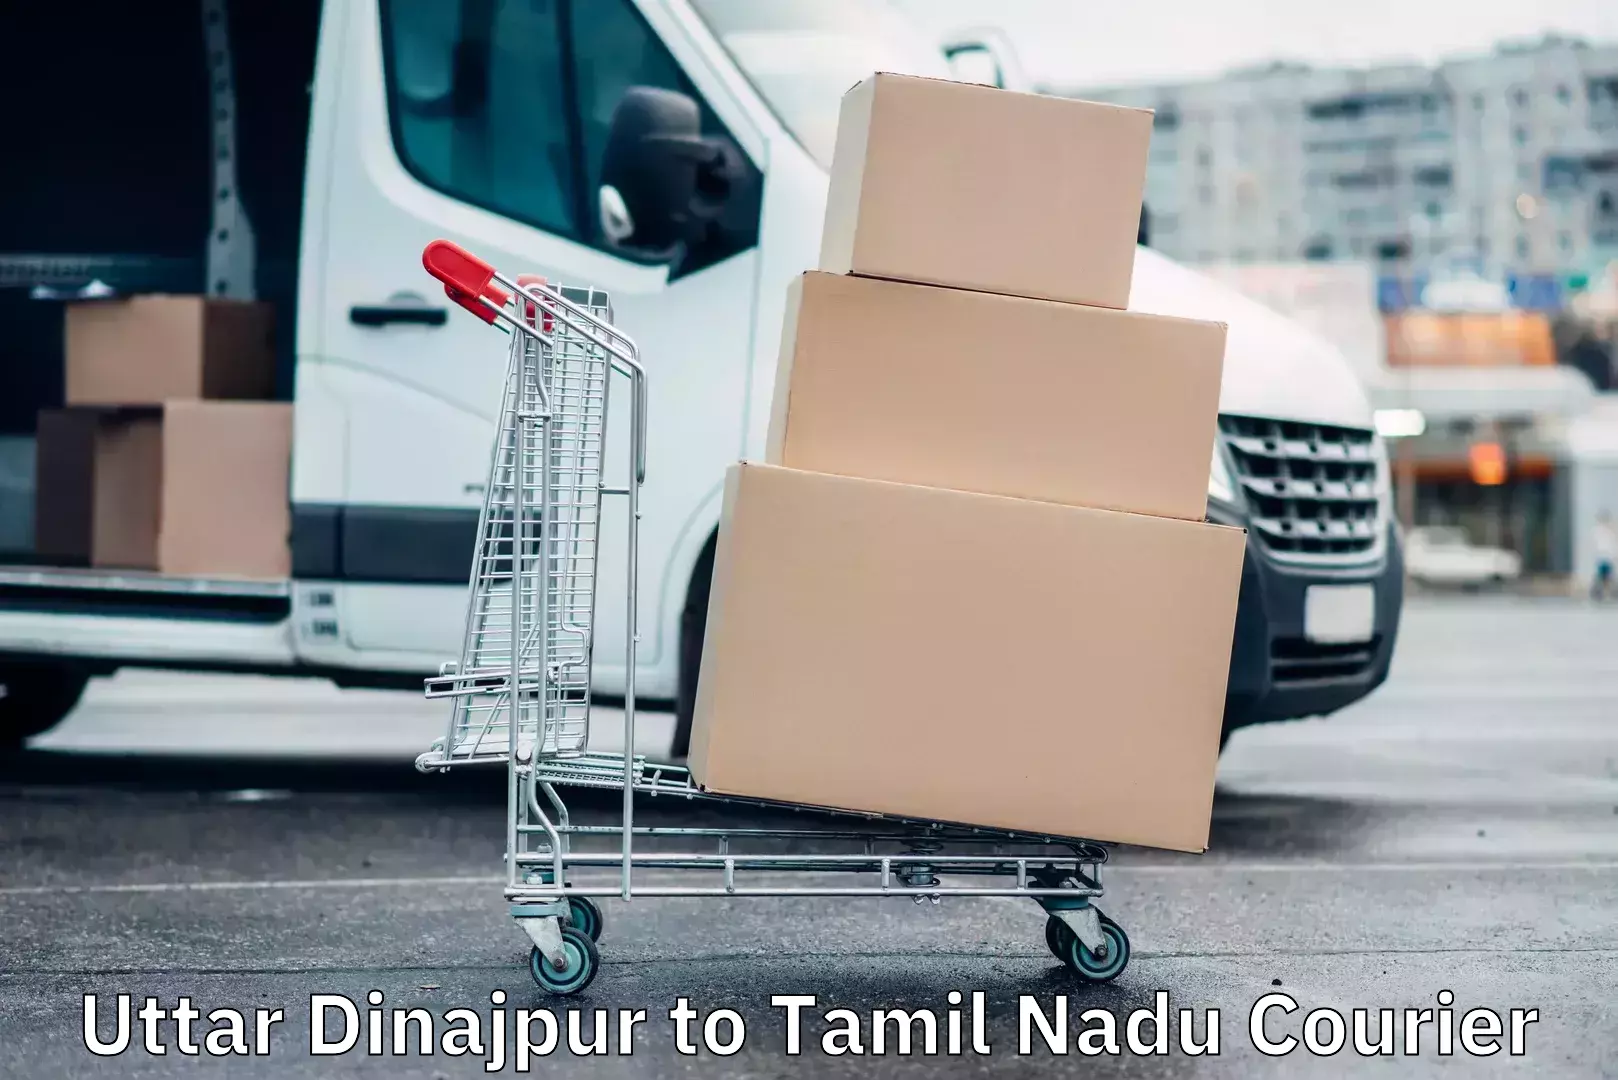 Express package transport in Uttar Dinajpur to Tamil Nadu